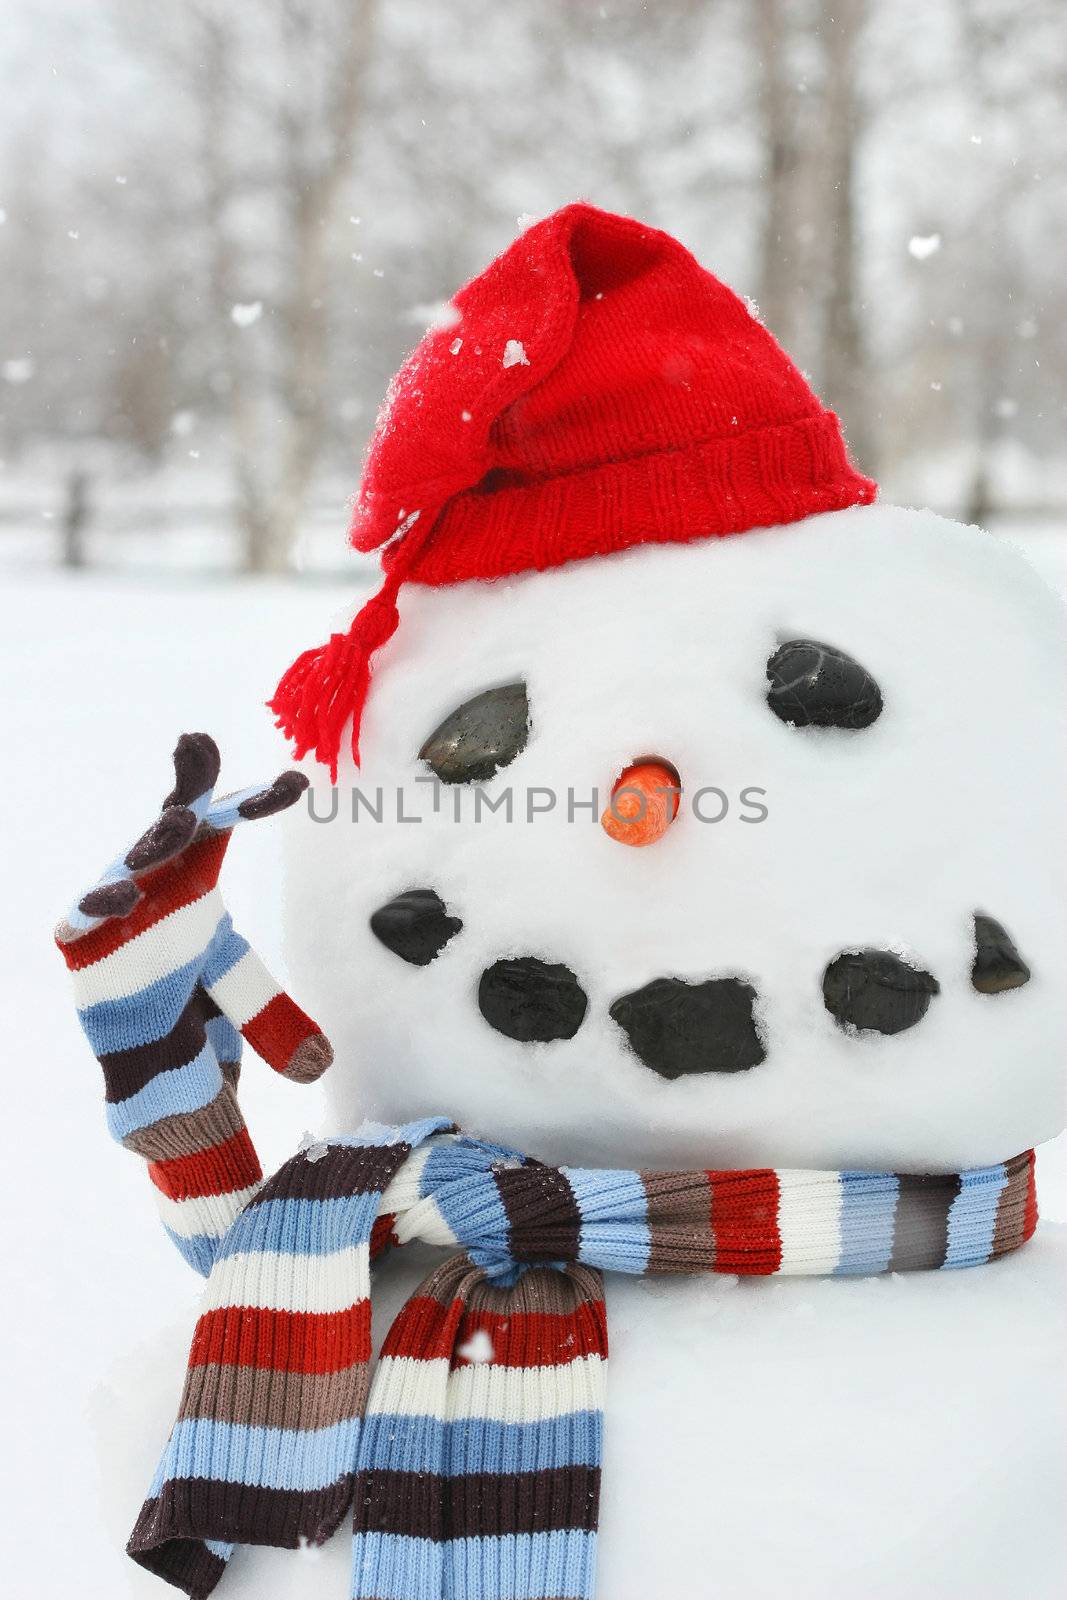 Mr. Snowman by Sandralise